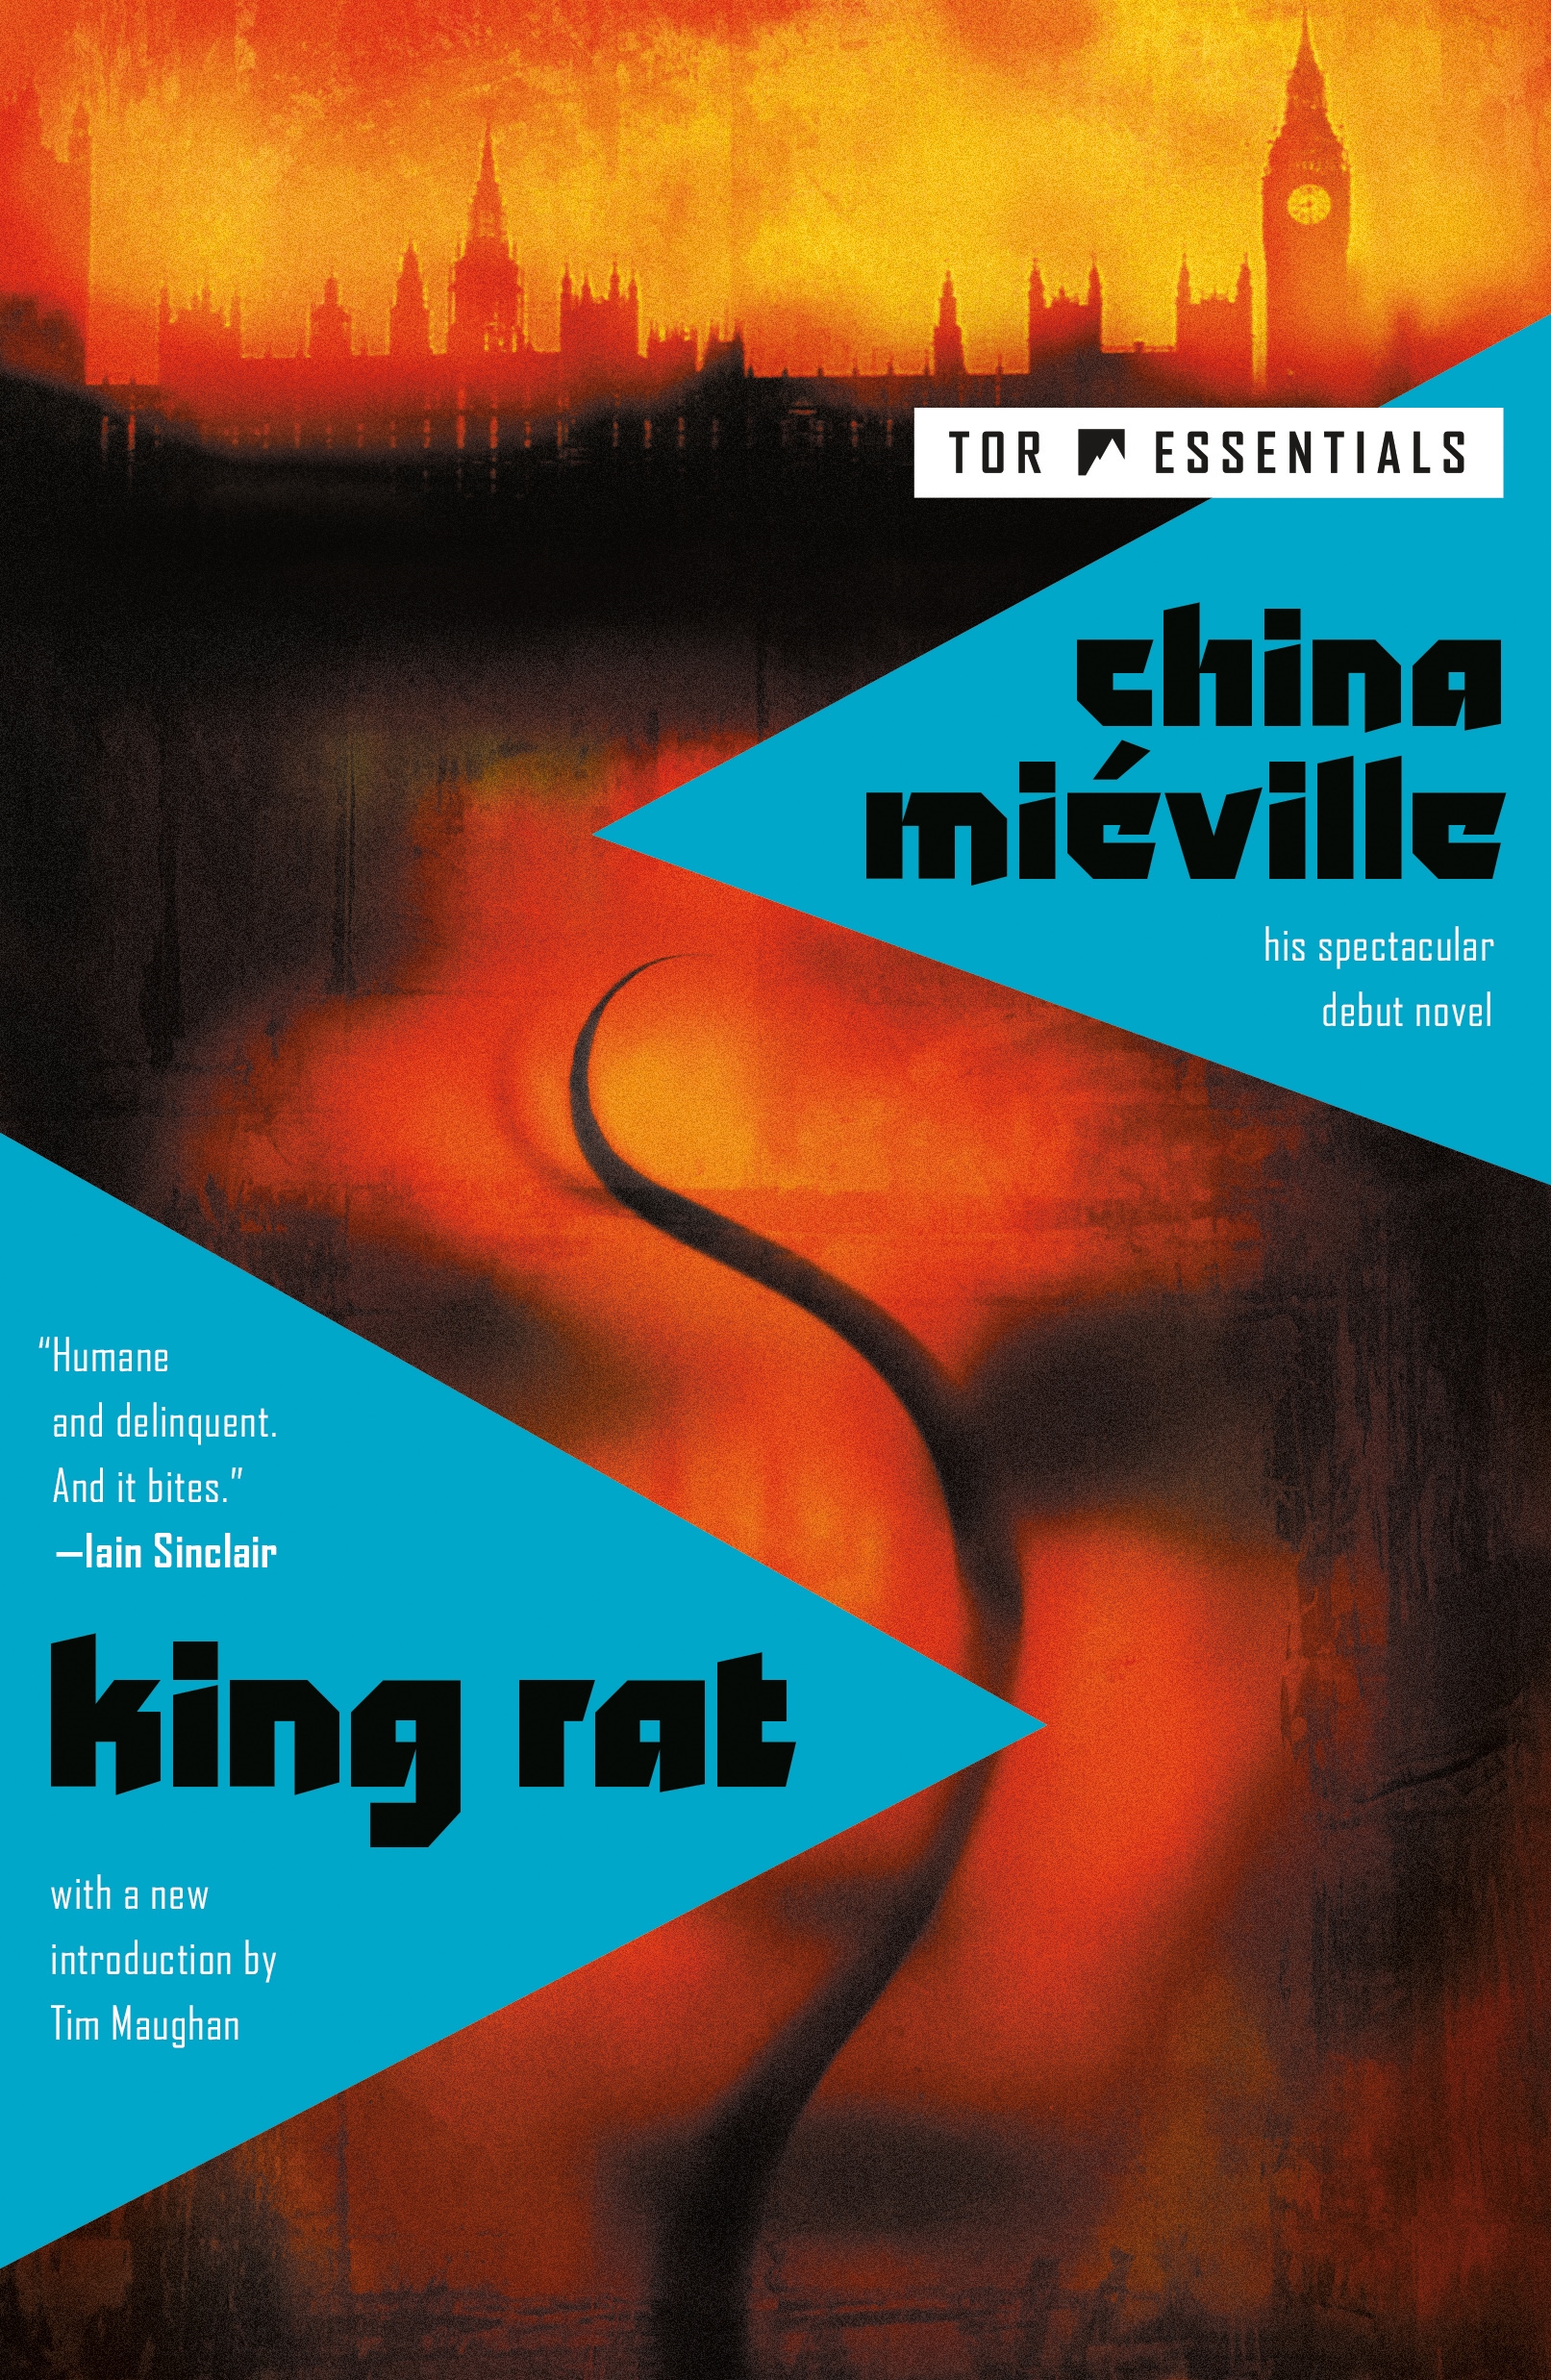 King Rat by China Miéville